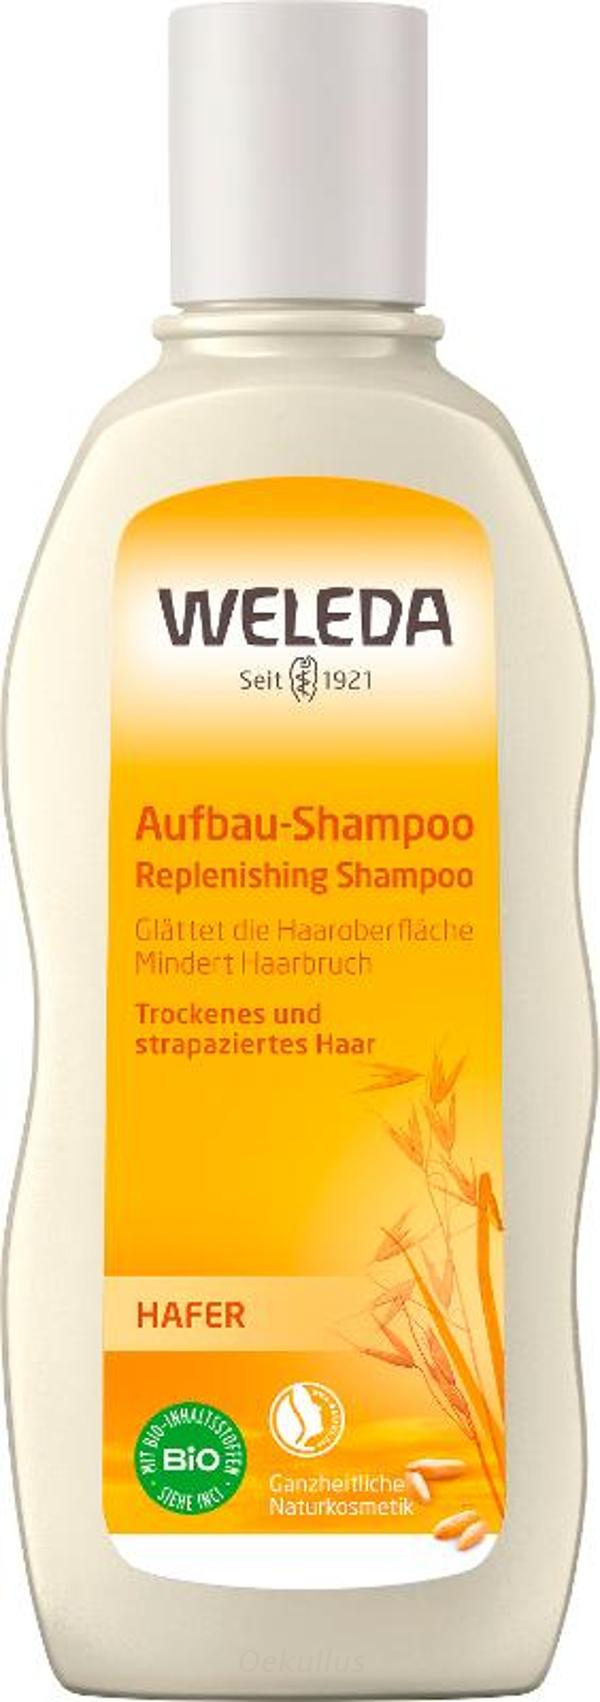 Produktfoto zu Hafer-Aufbau-Shampoo